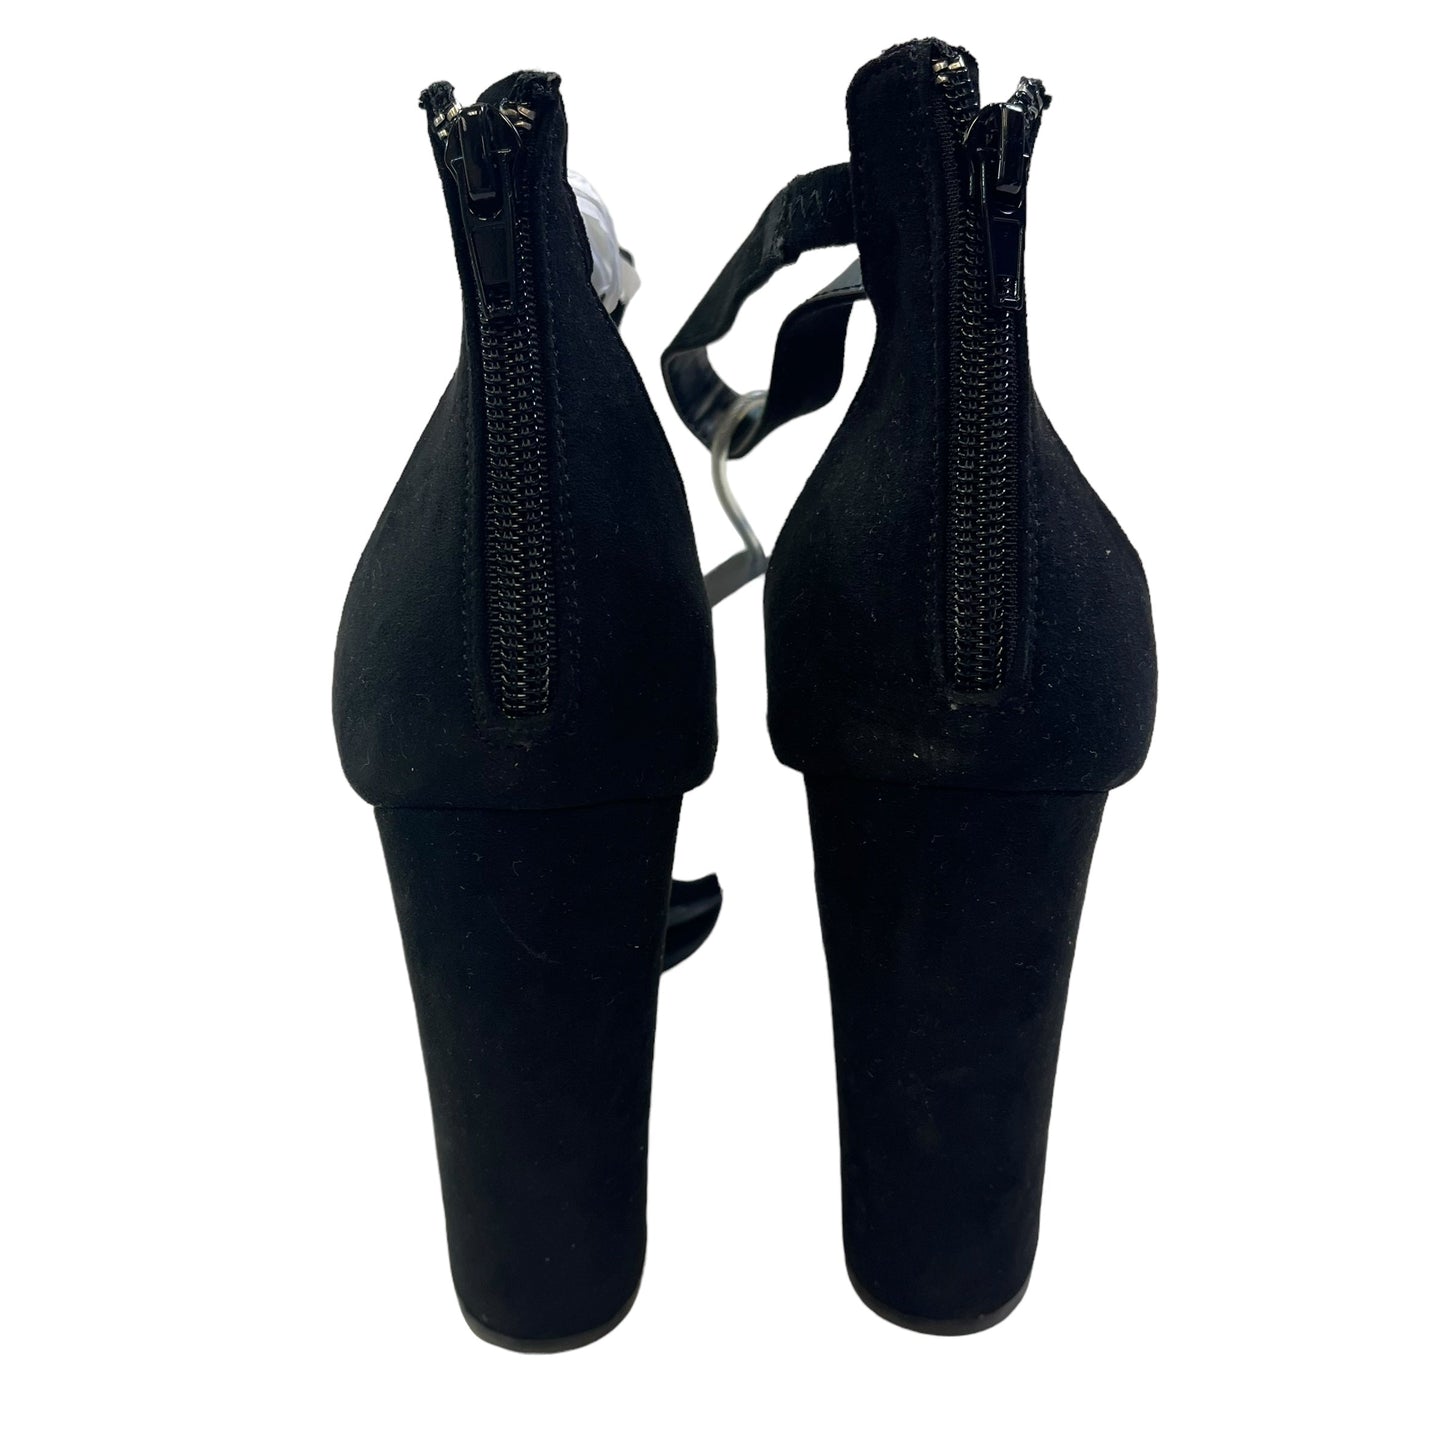 Black Sandals Heels Block Fashion Nova, Size 8